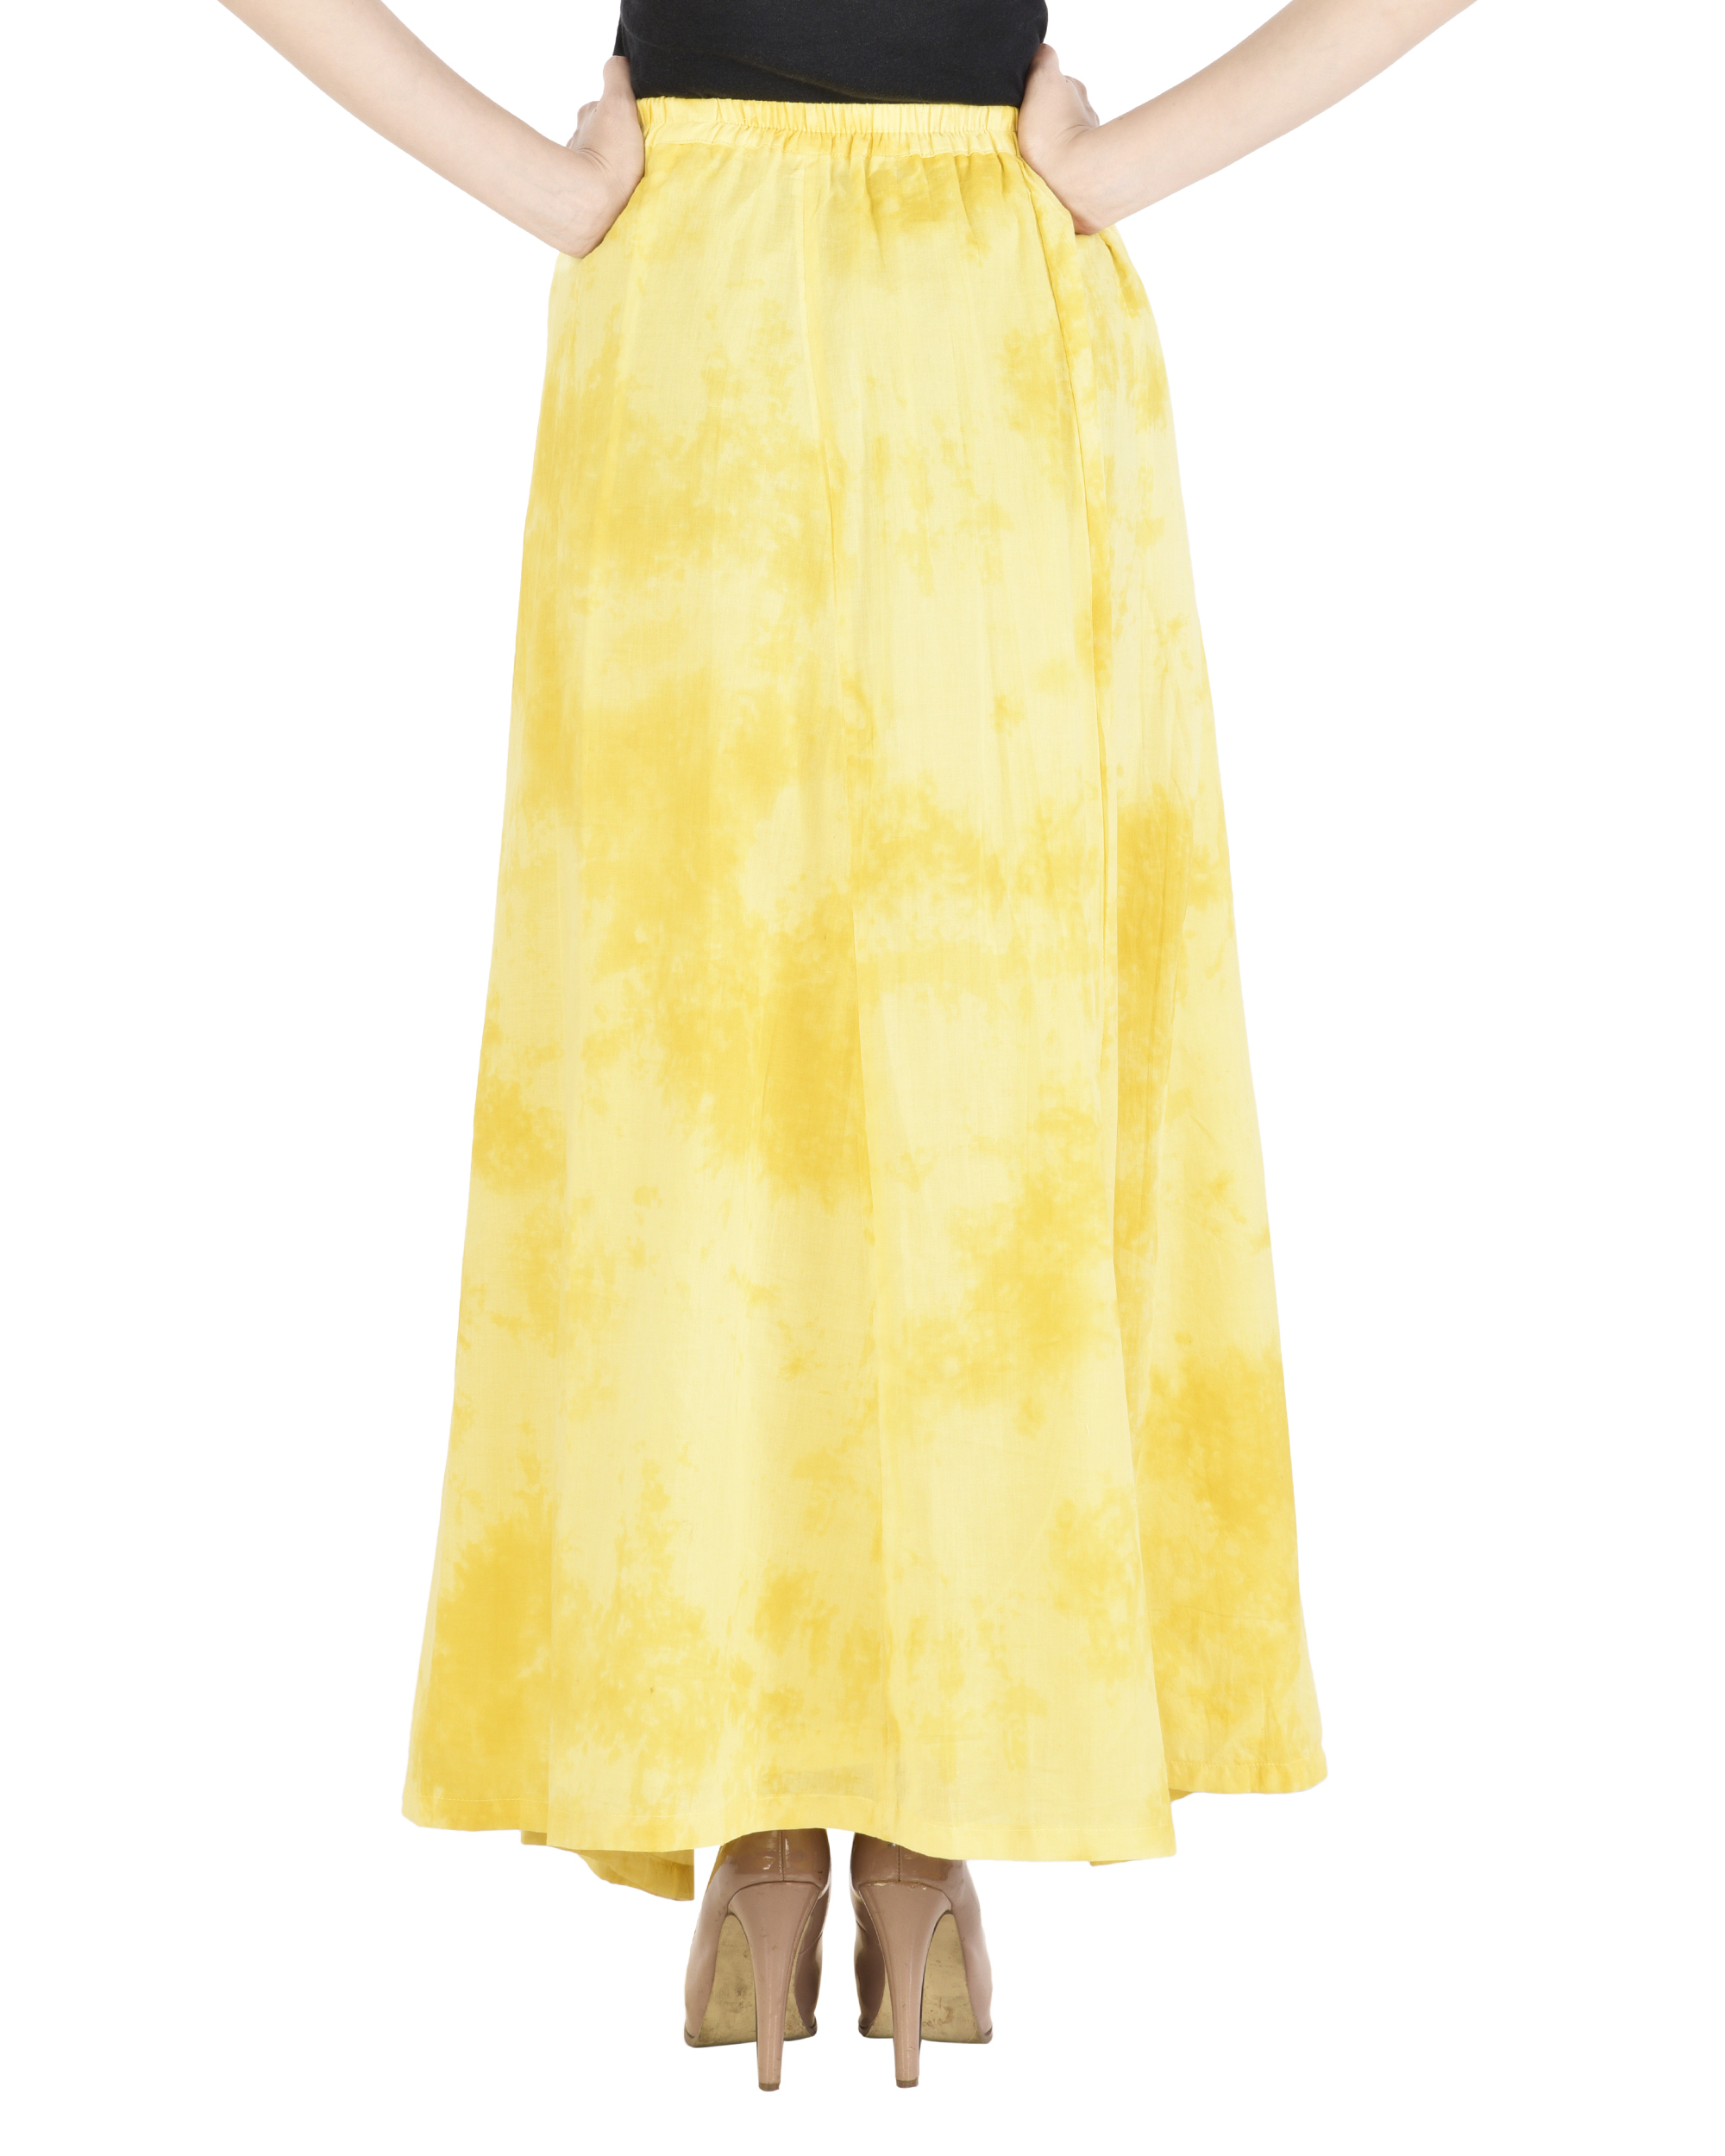 Paneled tunic & skirt set by Miroir by Madhulika Jhawar | The Secret Label